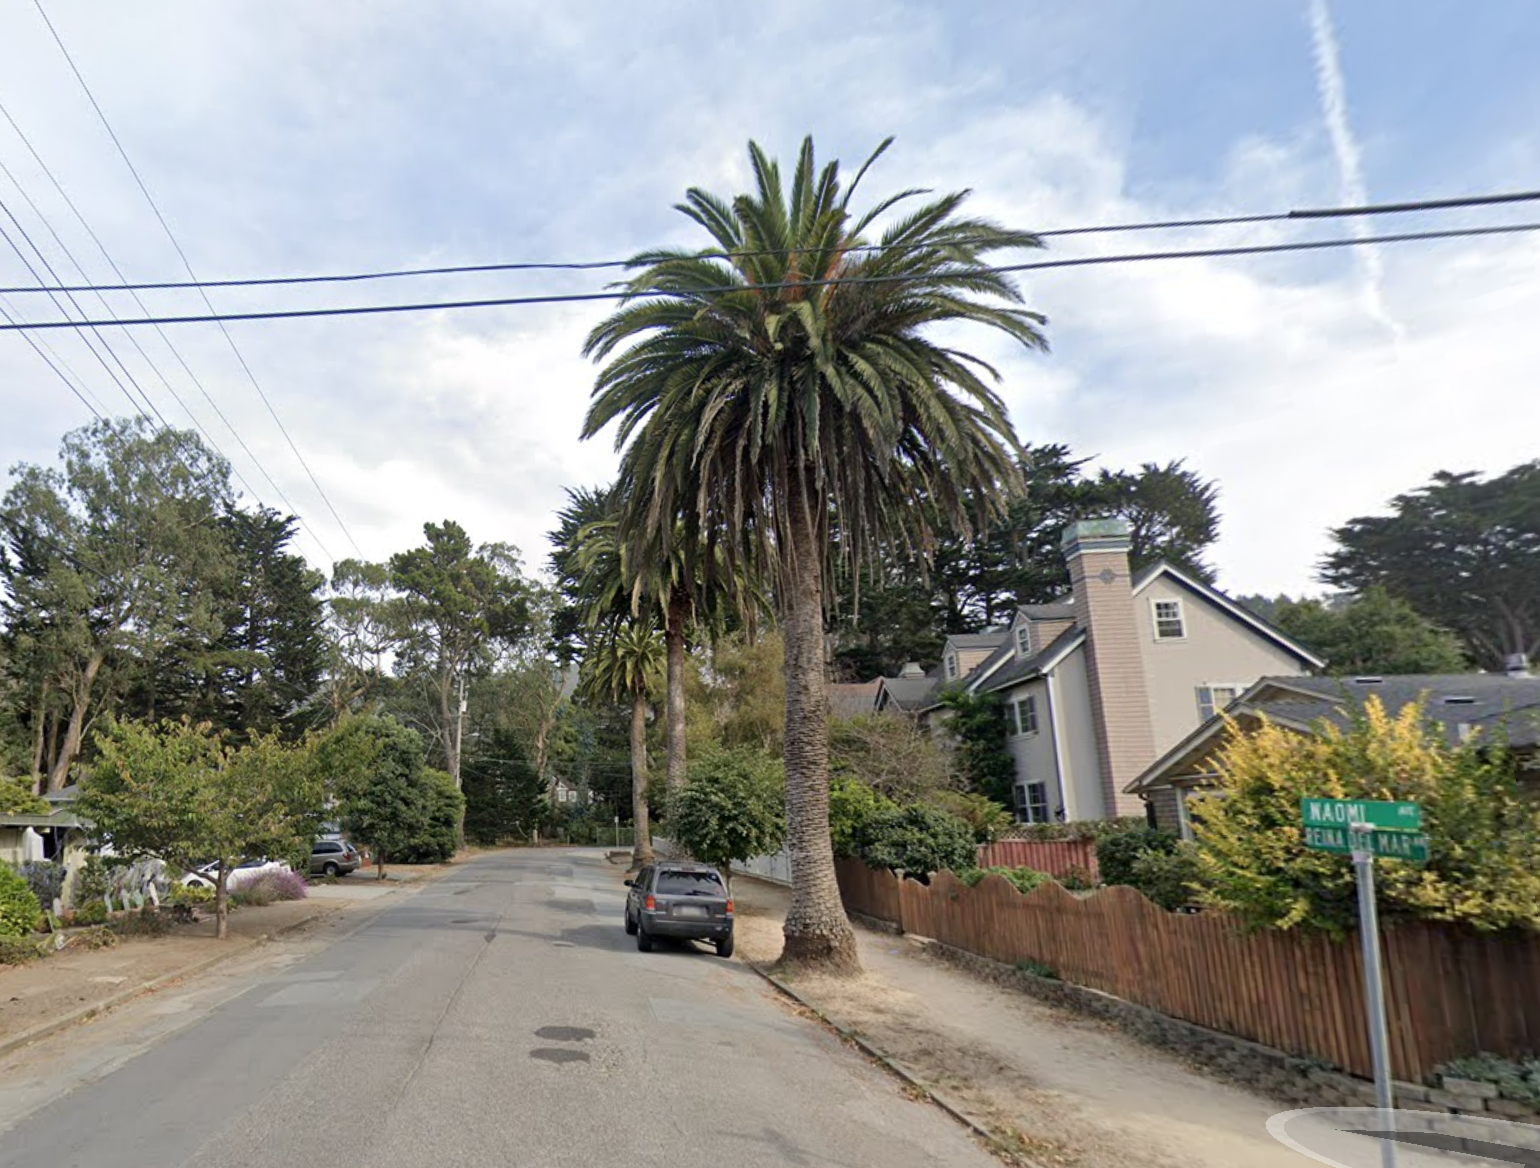 a street lined with a single palm tree